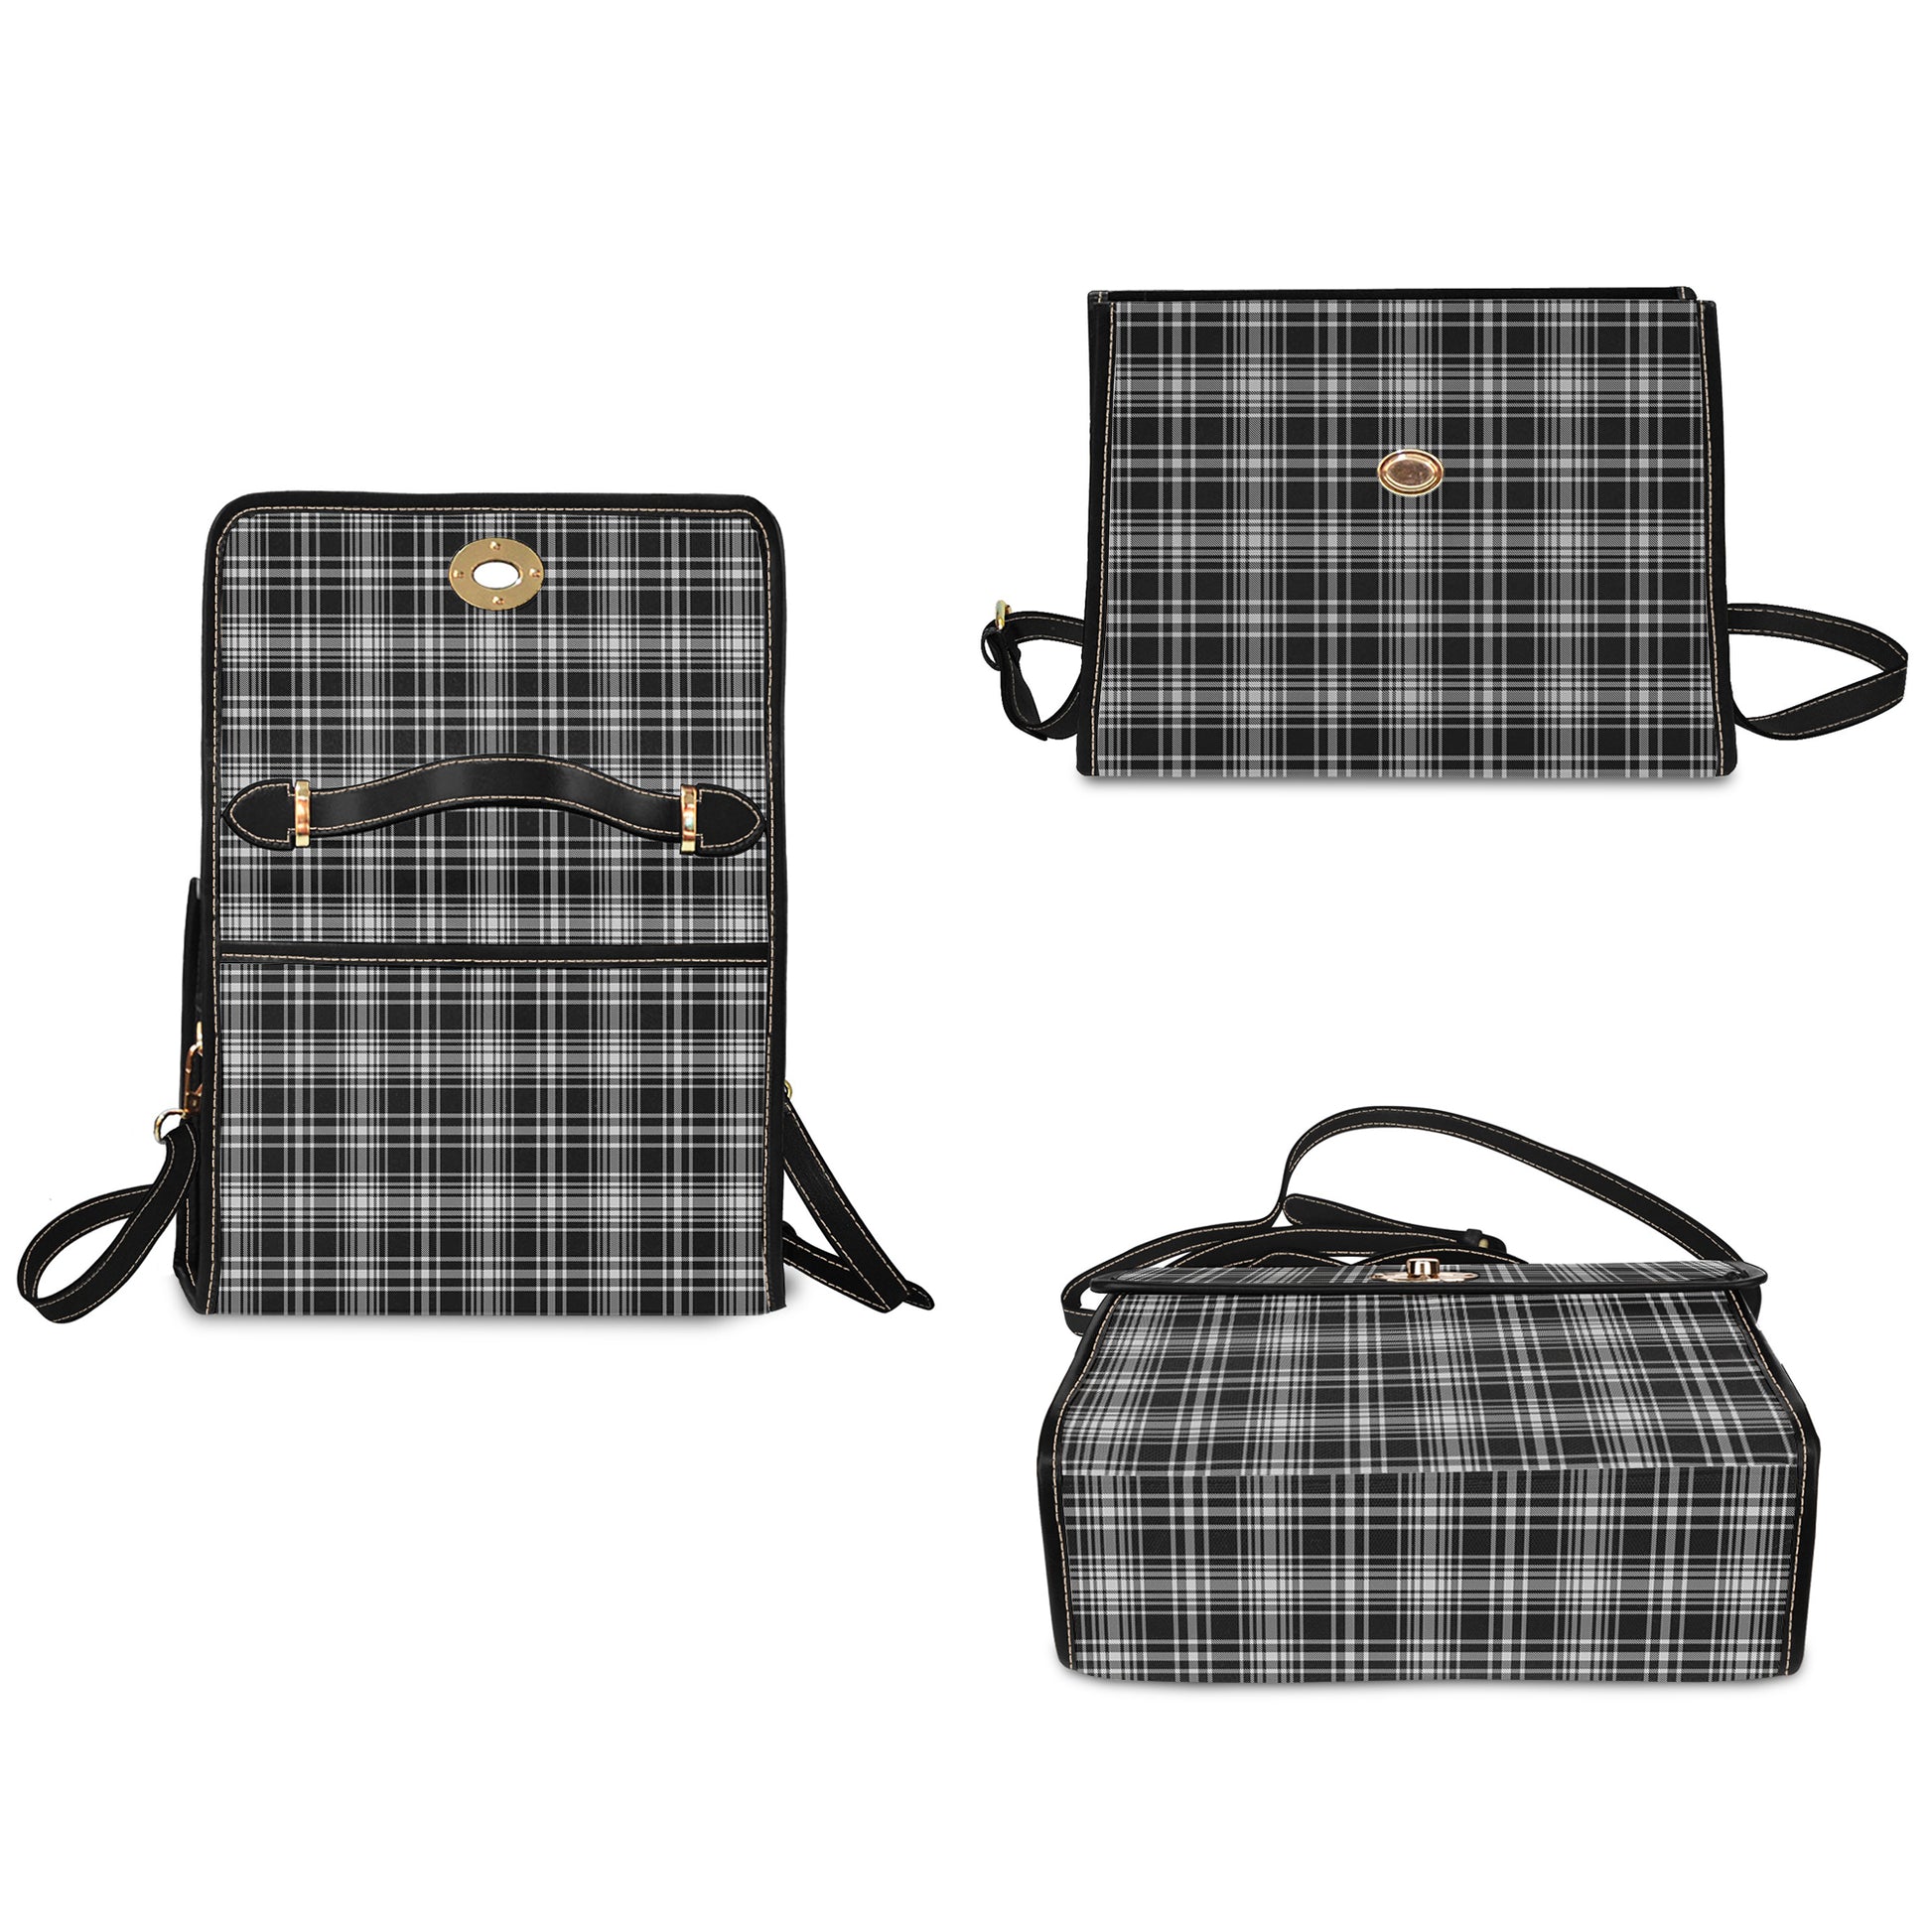 maclean-black-and-white-tartan-leather-strap-waterproof-canvas-bag